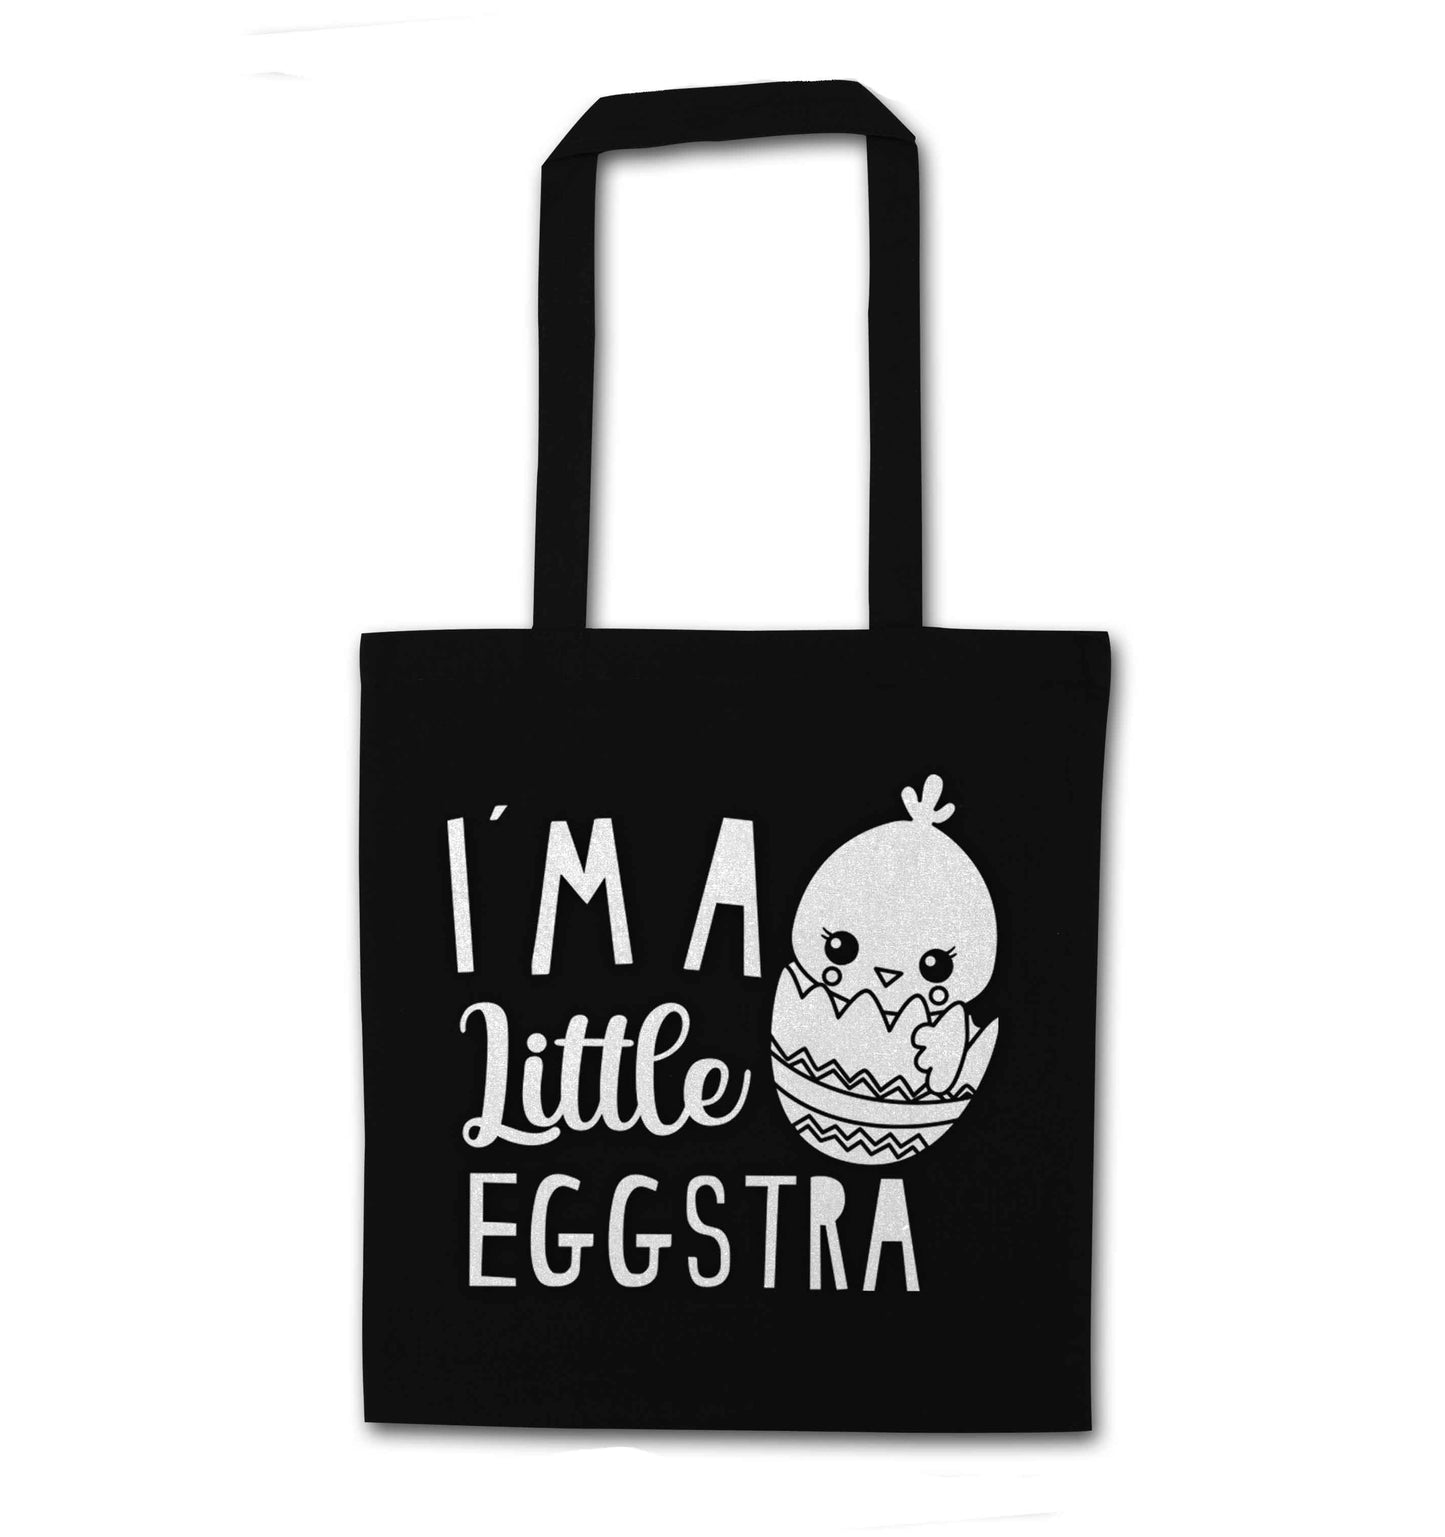 I'm a little eggstra black tote bag